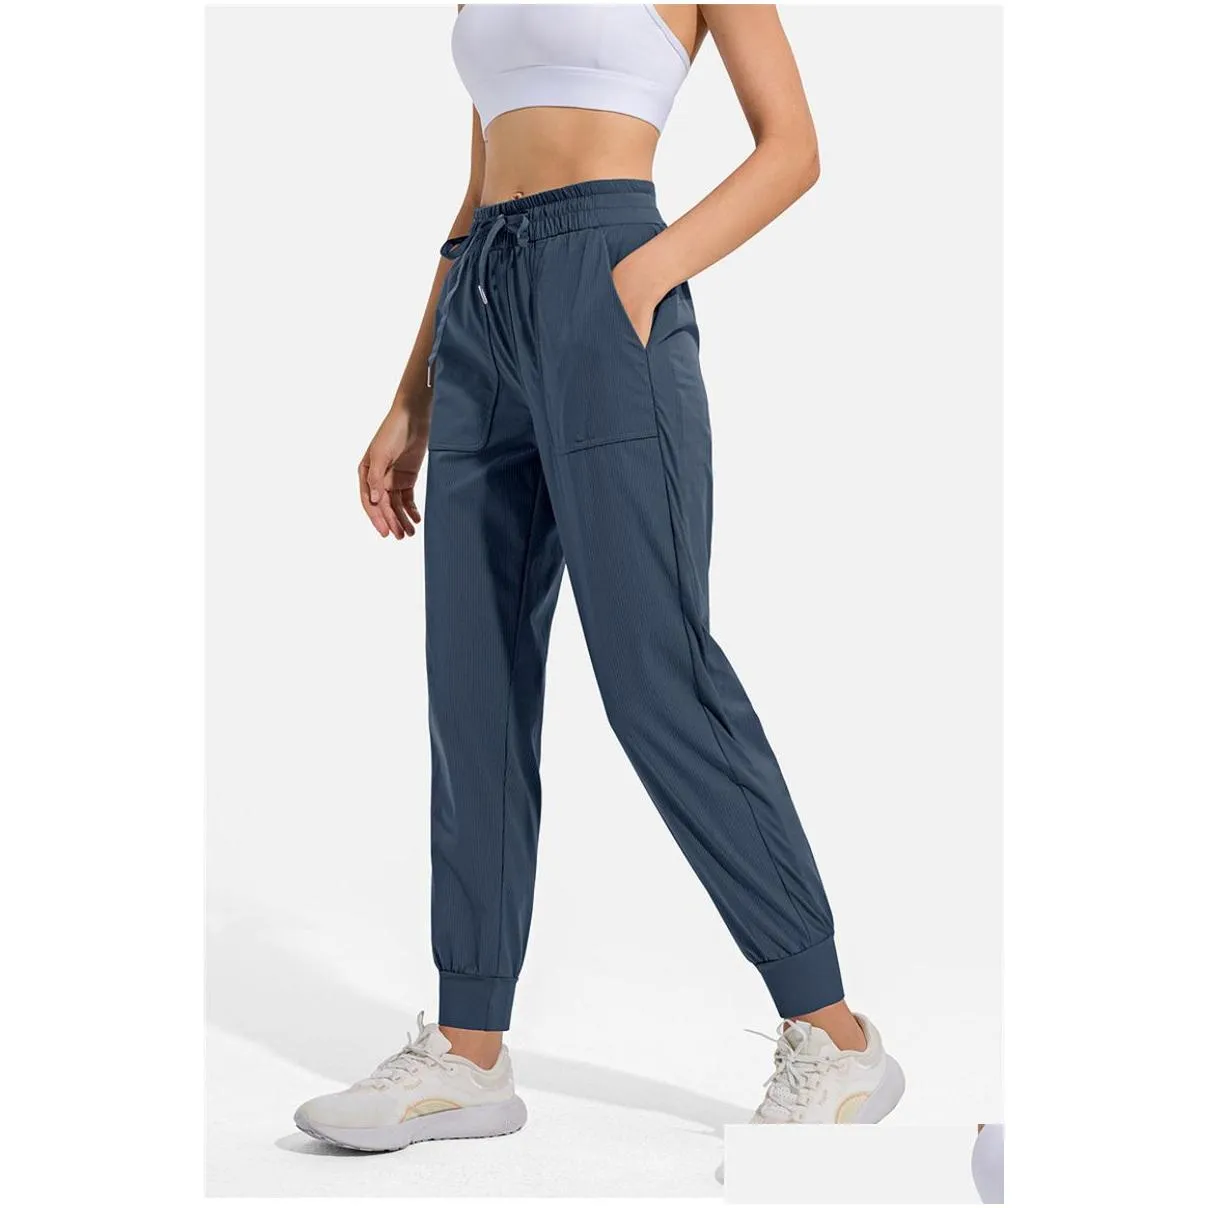 ll women jogging yoga ninth pants pocket fitness leggings soft high waist hip lift elastic casual pants drawstring legs sweatpants